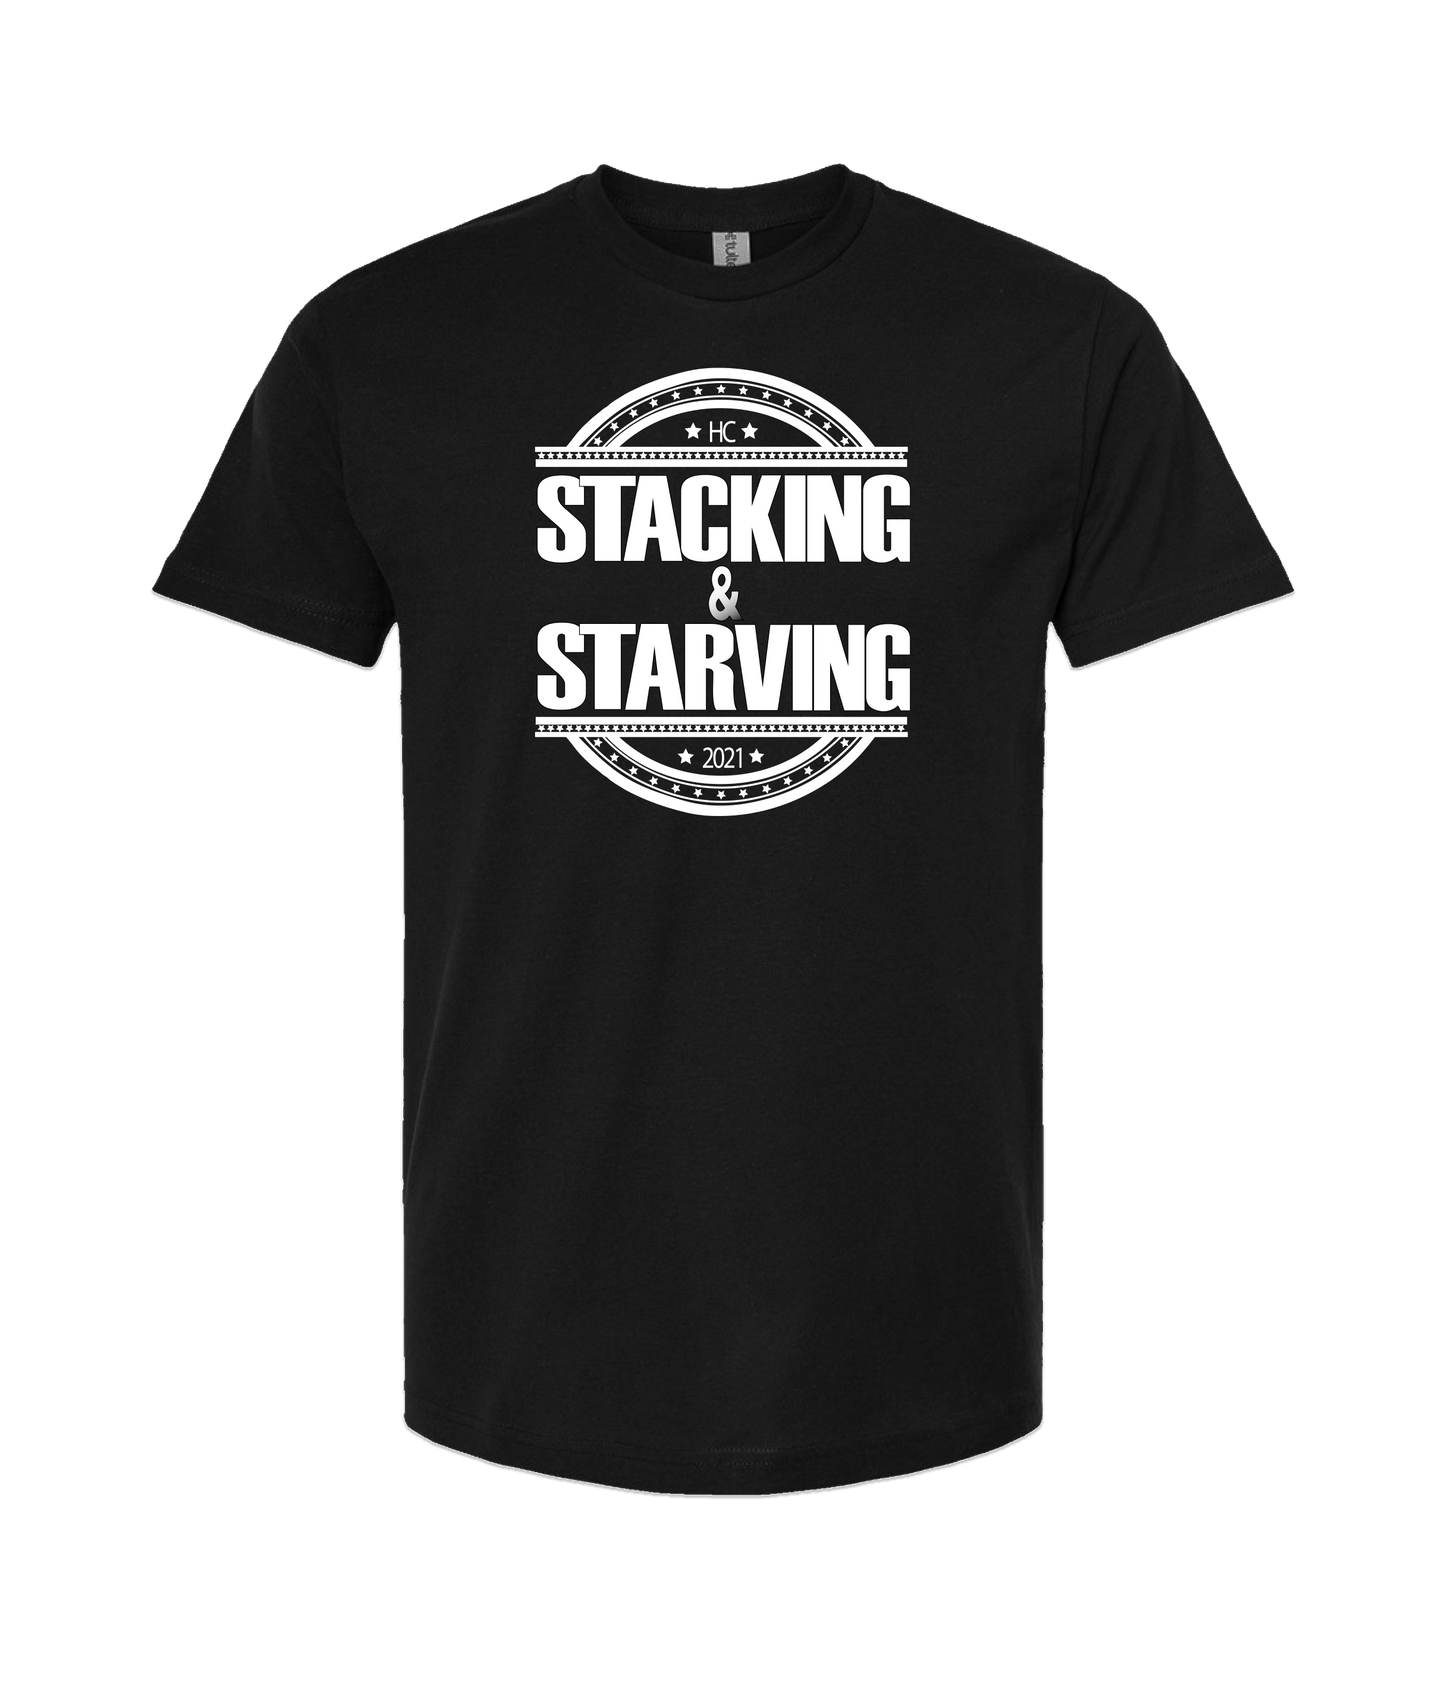 A1 Yolaman - Stacking & Starving - Black T-Shirt